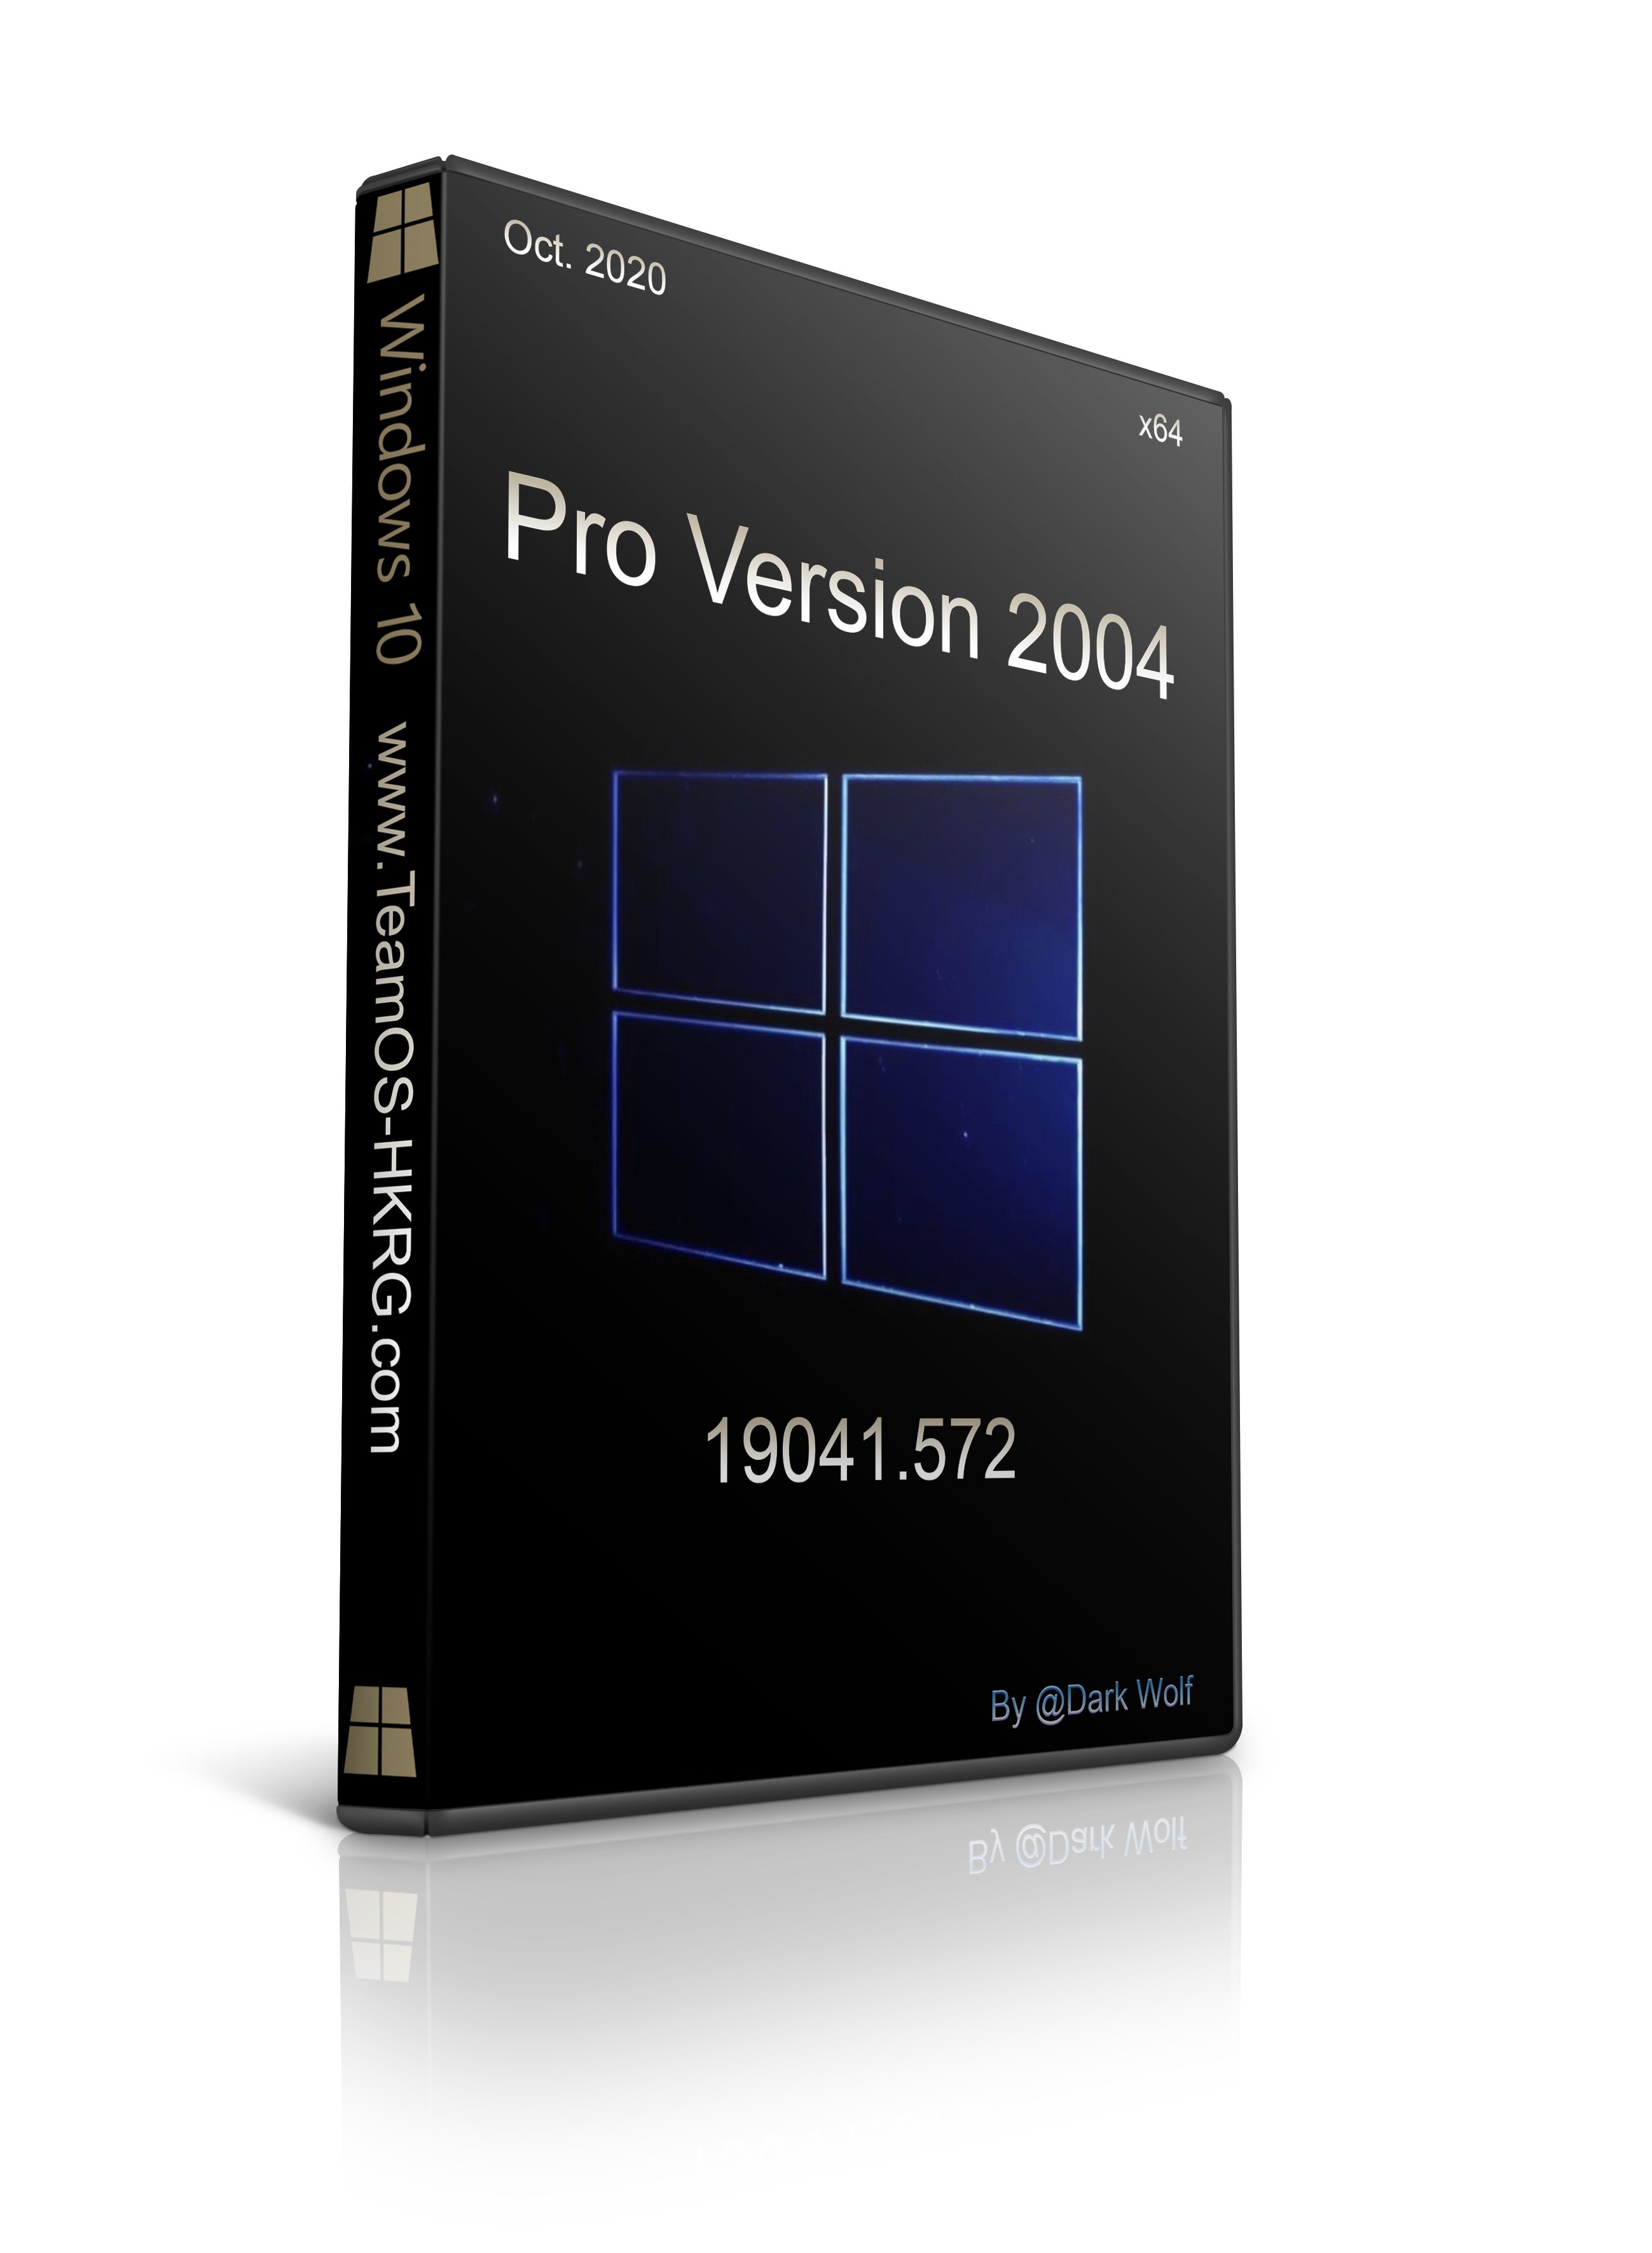 windows 10 pro version 2004 iso download 64 bit